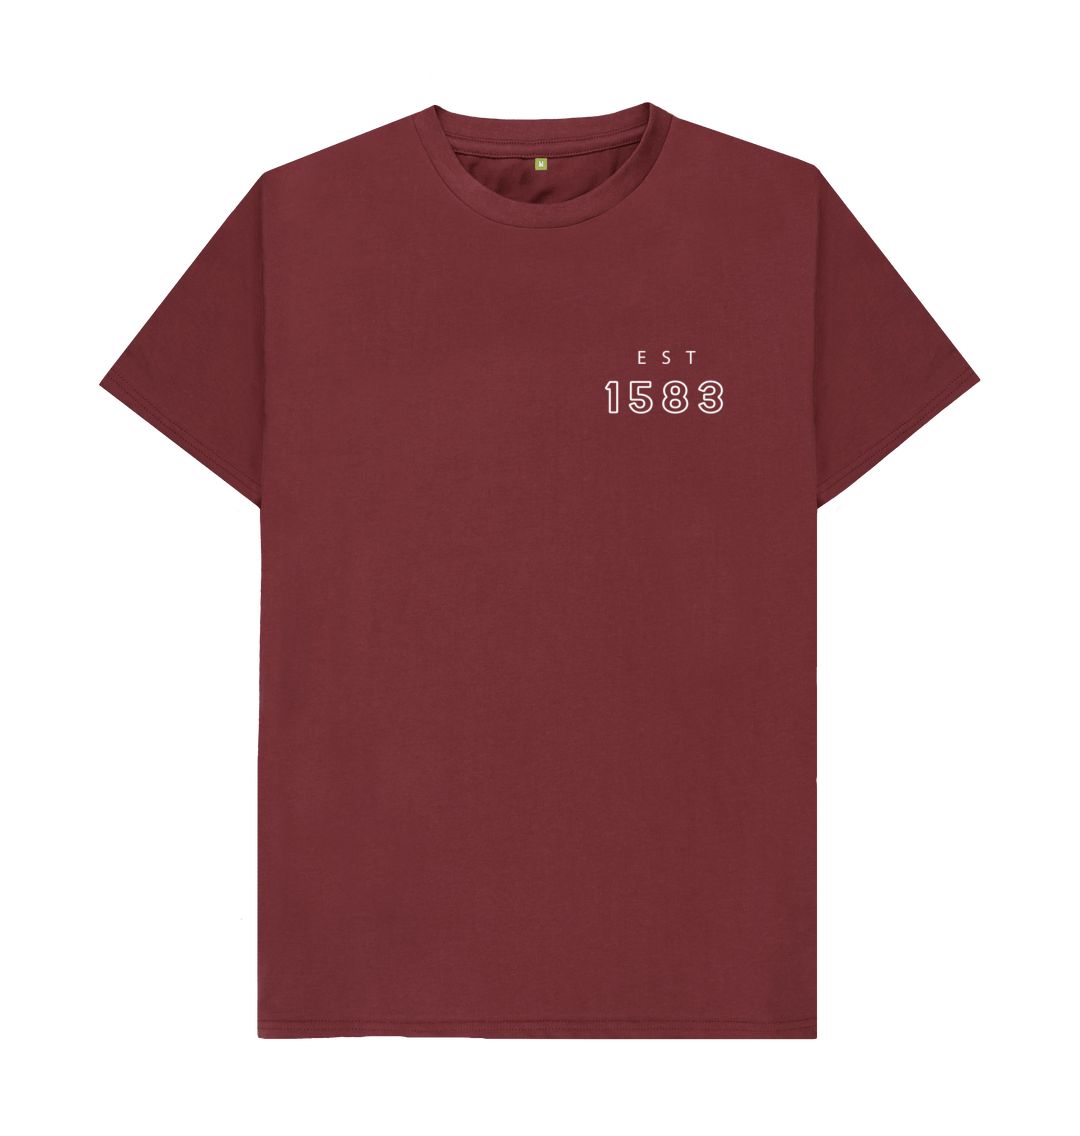 Red Wine Teviot Row House Coordinates Design T-Shirt